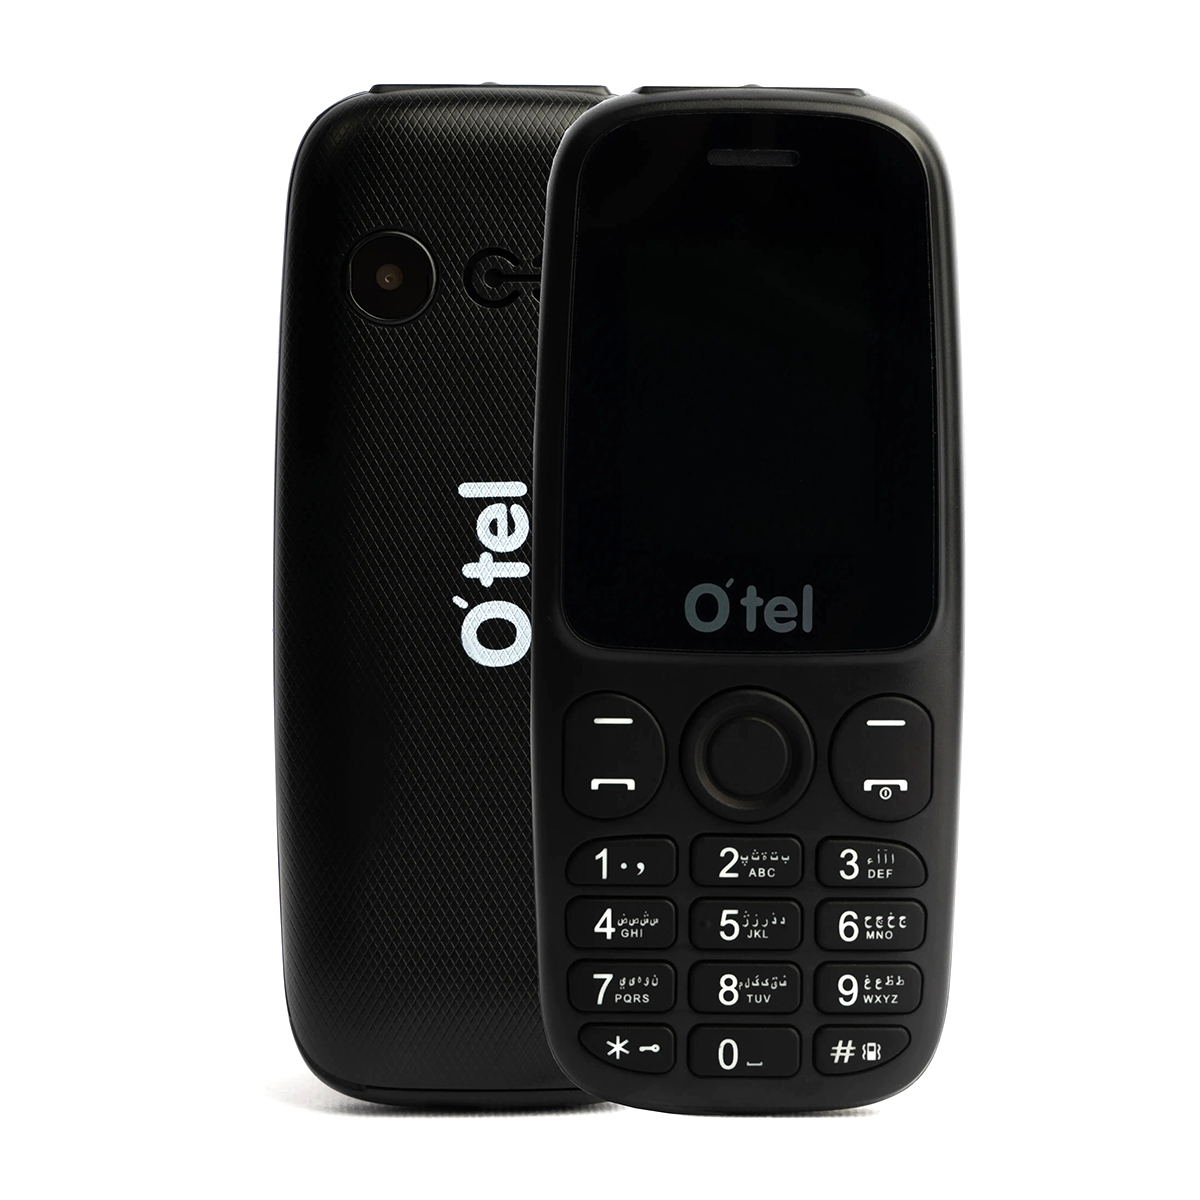 گوشی موبایل اوتل مدل F05 دو سیم کارت